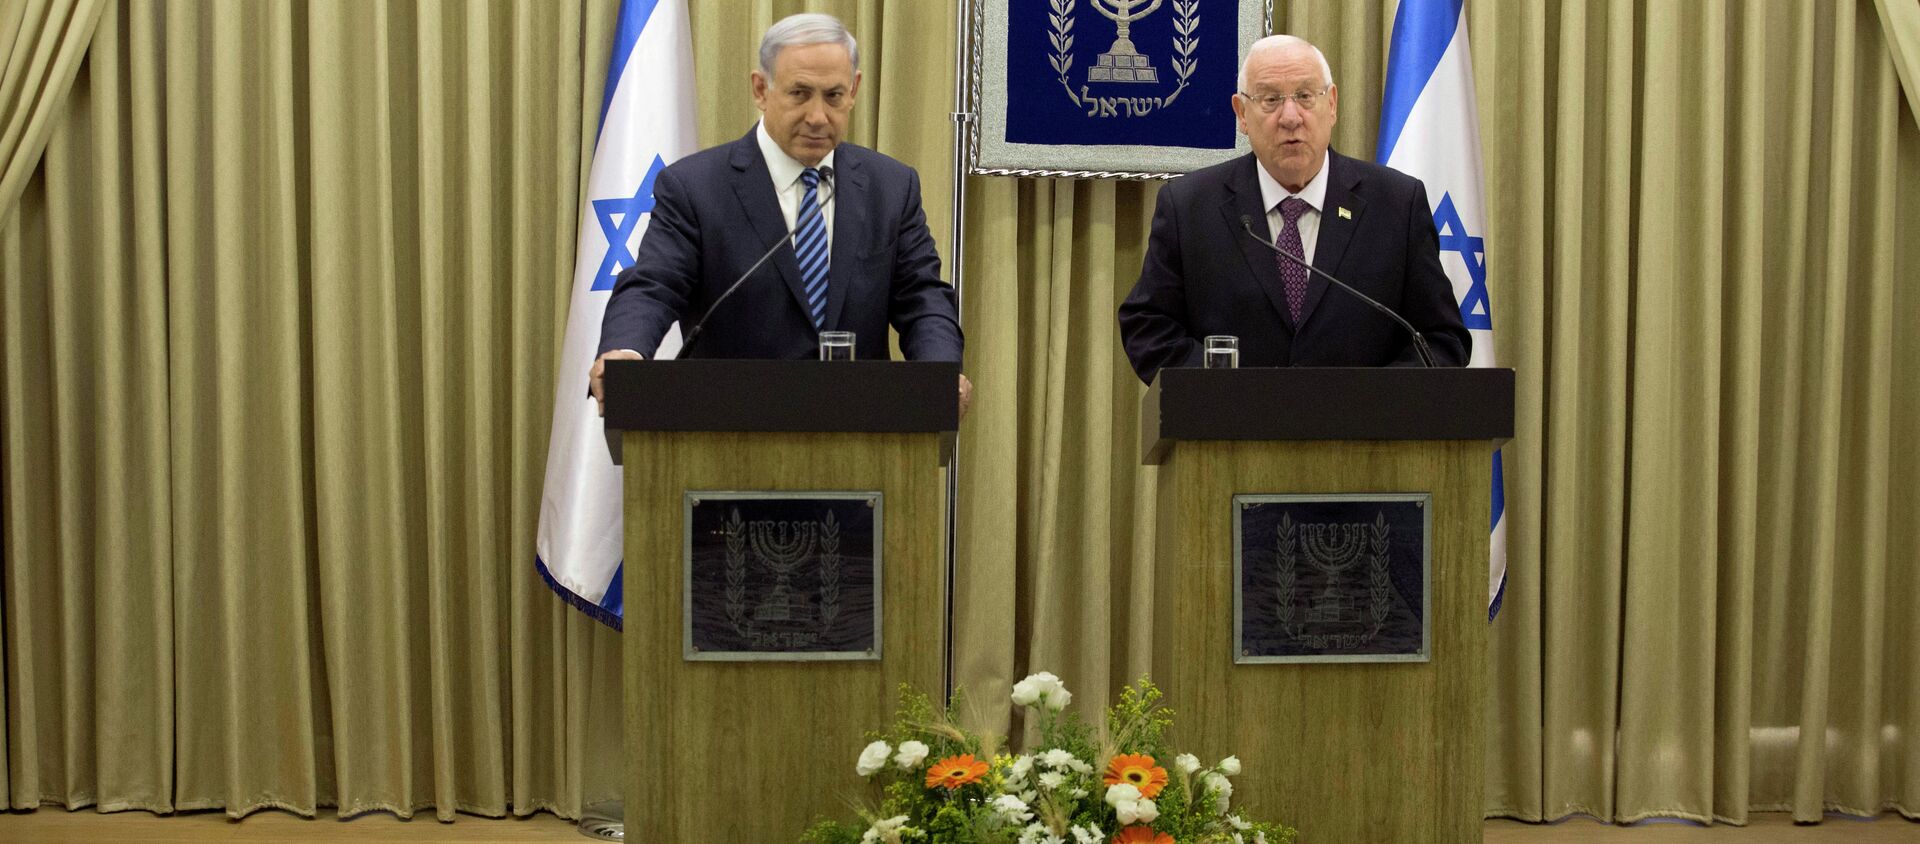 Israeli Prime Minister Benjamin Netanyahu and President Reuven Rivlin (R) attend a press conference at the president's residence in Jerusalem on April 20, 2015 - Sputnik International, 1920, 06.04.2021